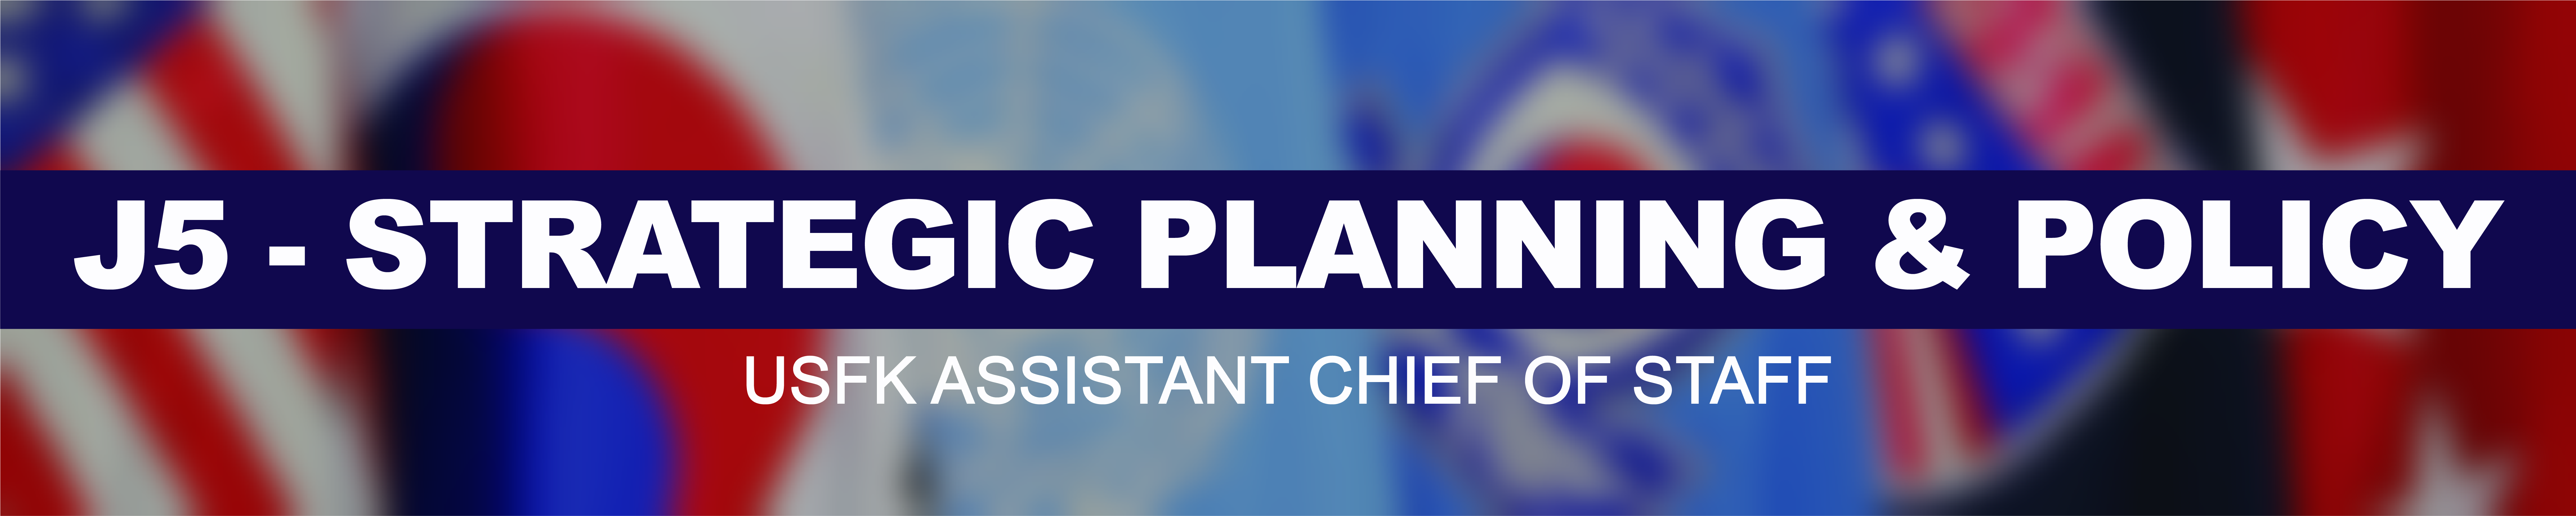 J5 - Strategic Planning & Policy